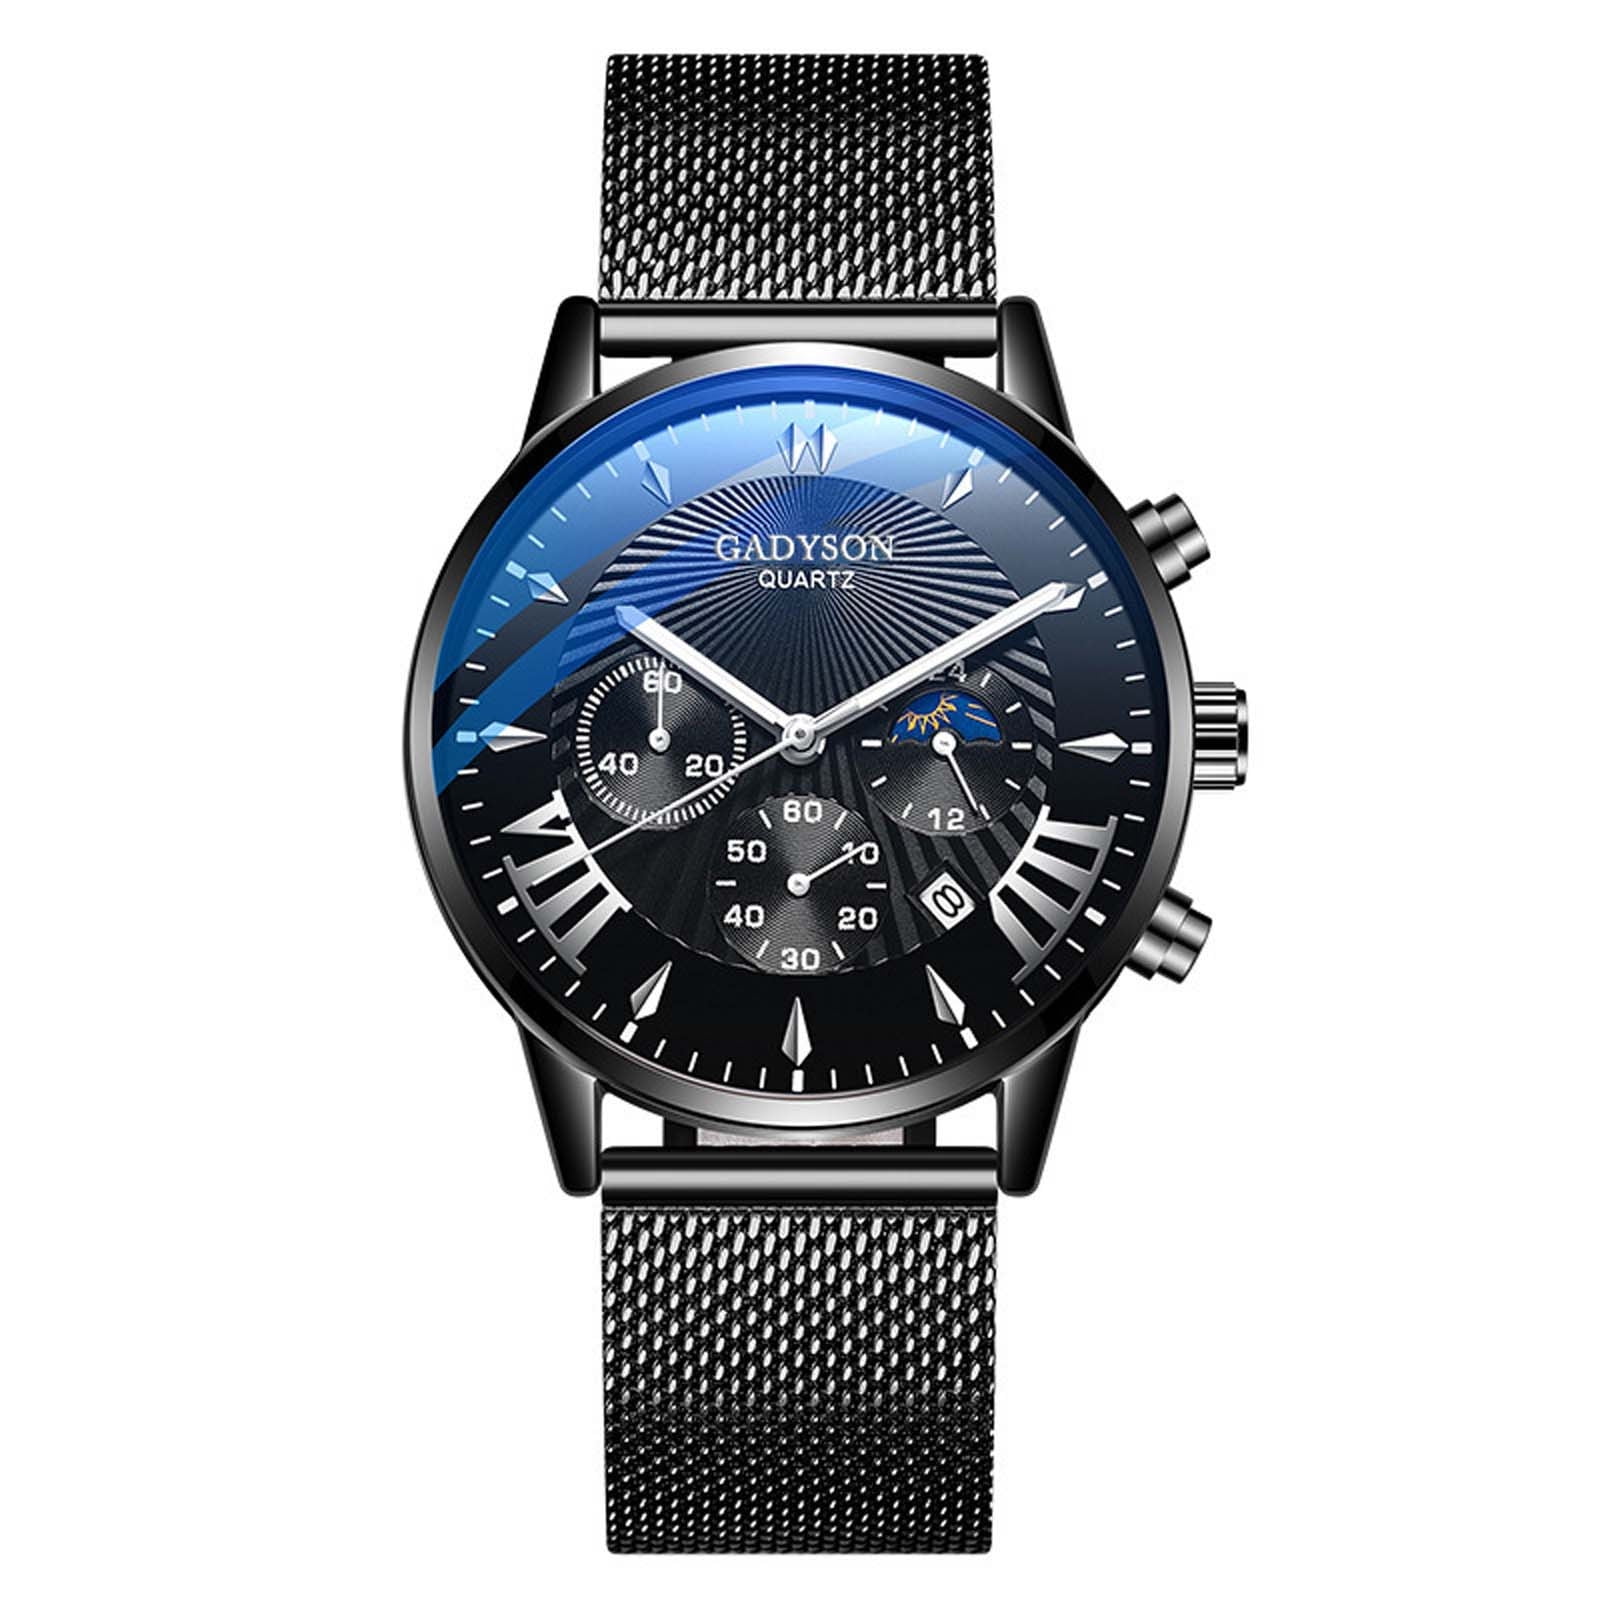 TIHLMK Deals Clearance Watches for Men Men Fashion Watch Clock ...